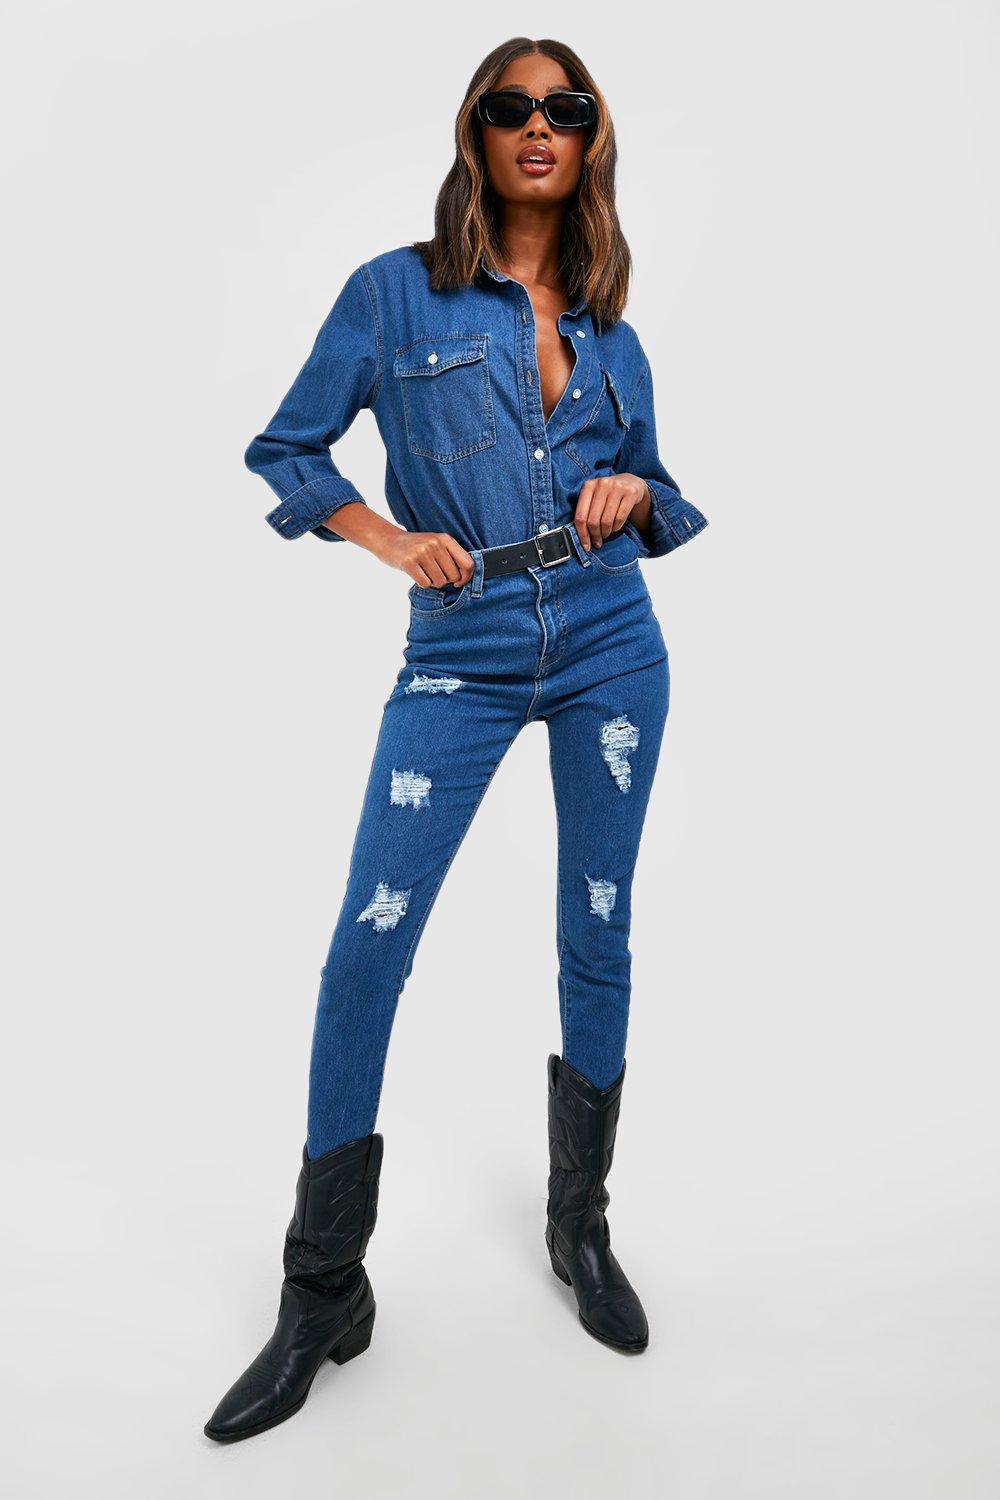 Super Zerrissene Skinny Jeans Mit Ausgefranstem Saum - Mittelblau - 32, Mittelblau